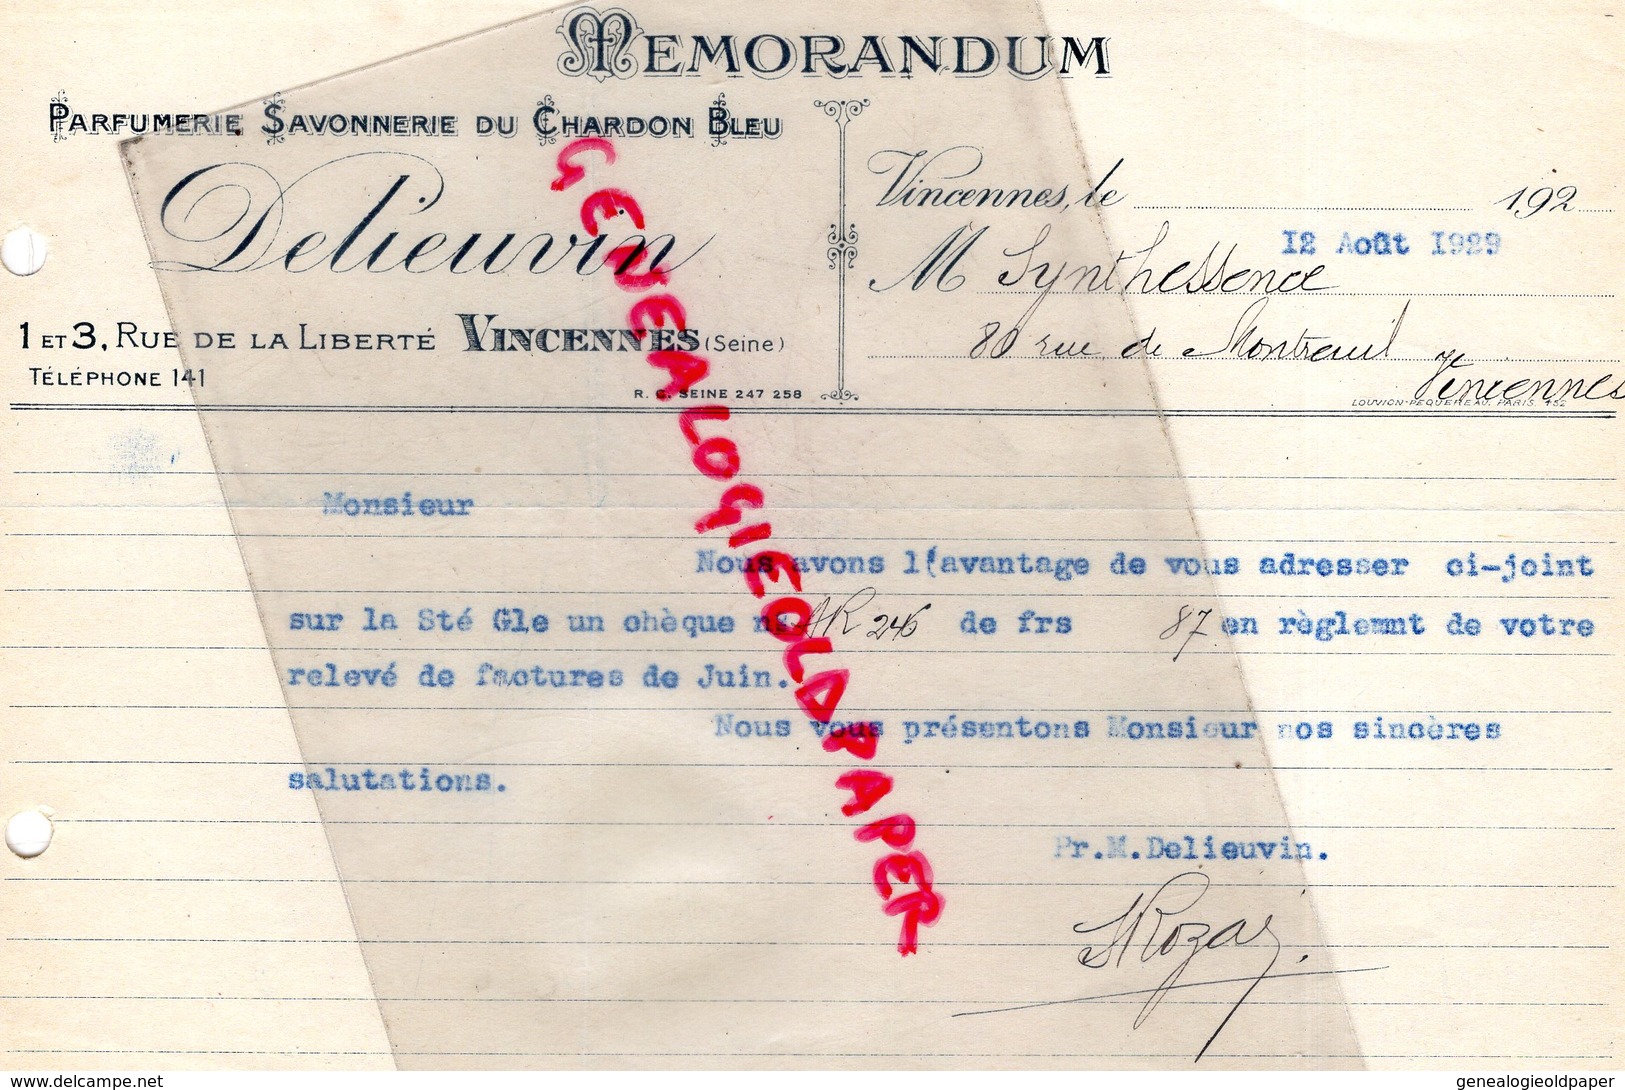 94- VINCENNES- MEMORANDUM DELIEUVIN- PARFUMERIE SAVONNERIE DU CHARDON BLEU- PARFUM -1 RUE LIBERTE- 1929 - Chemist's (drugstore) & Perfumery